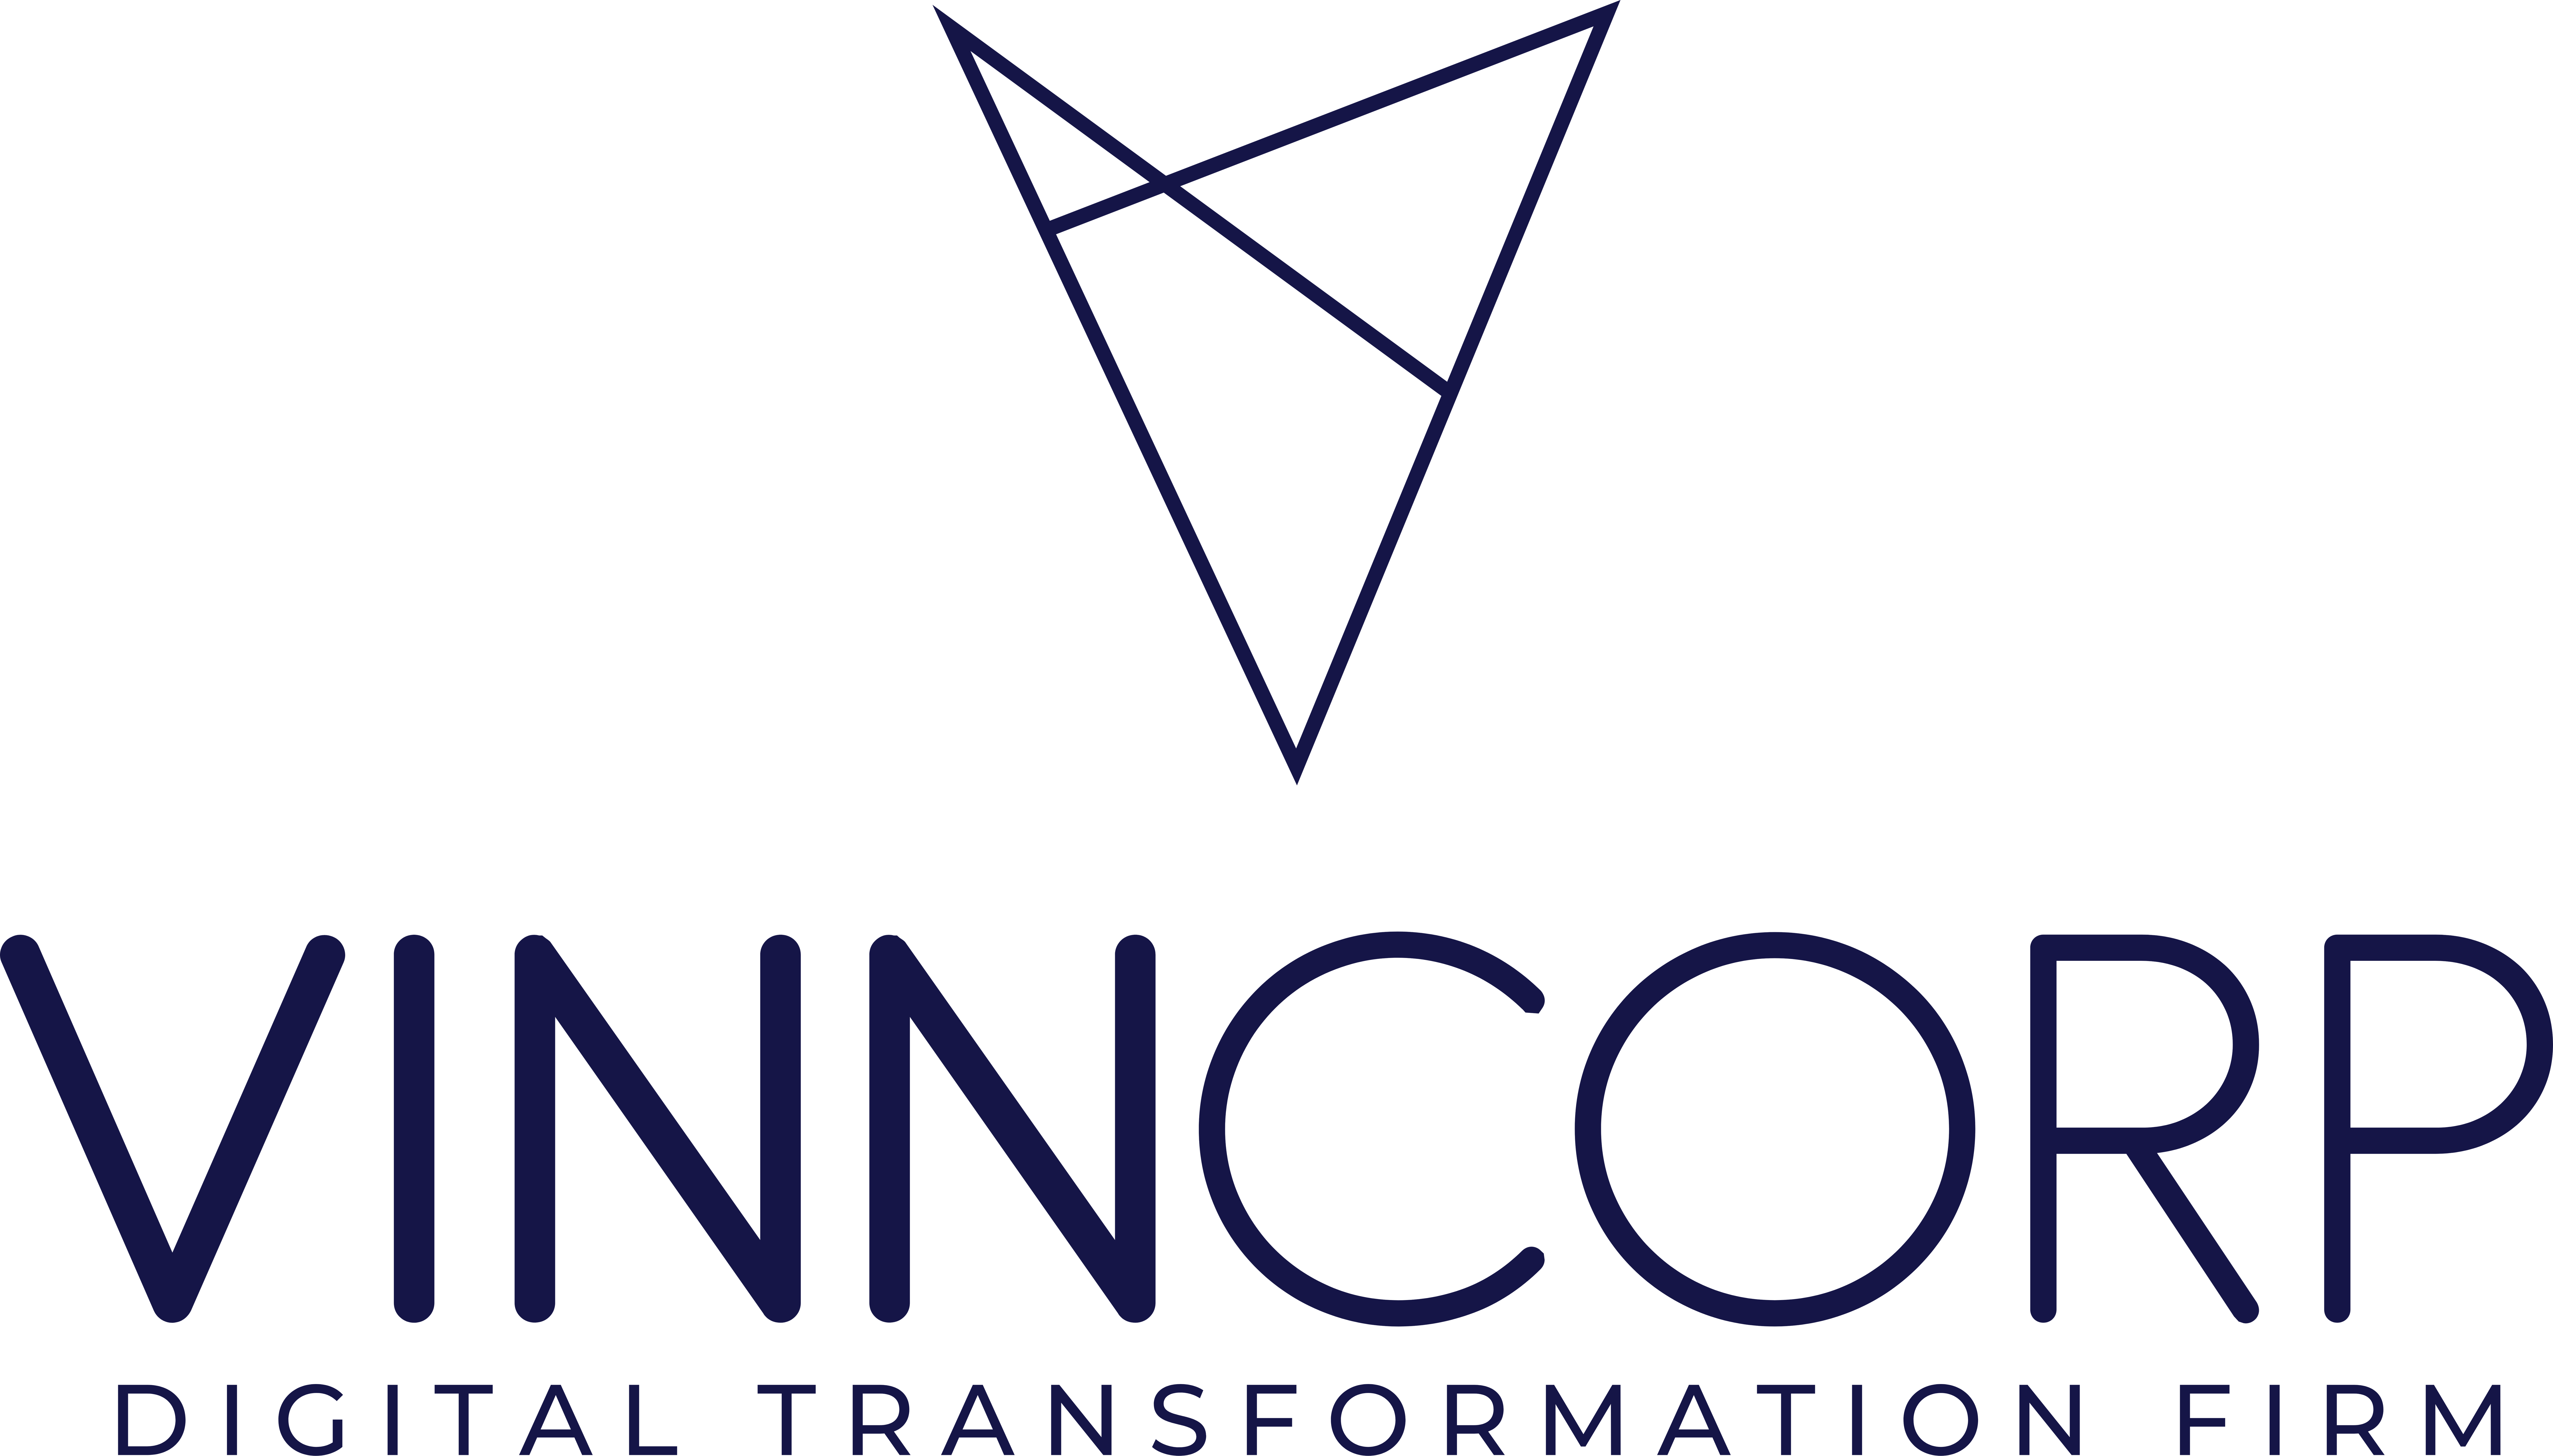 Vinncorp Logo